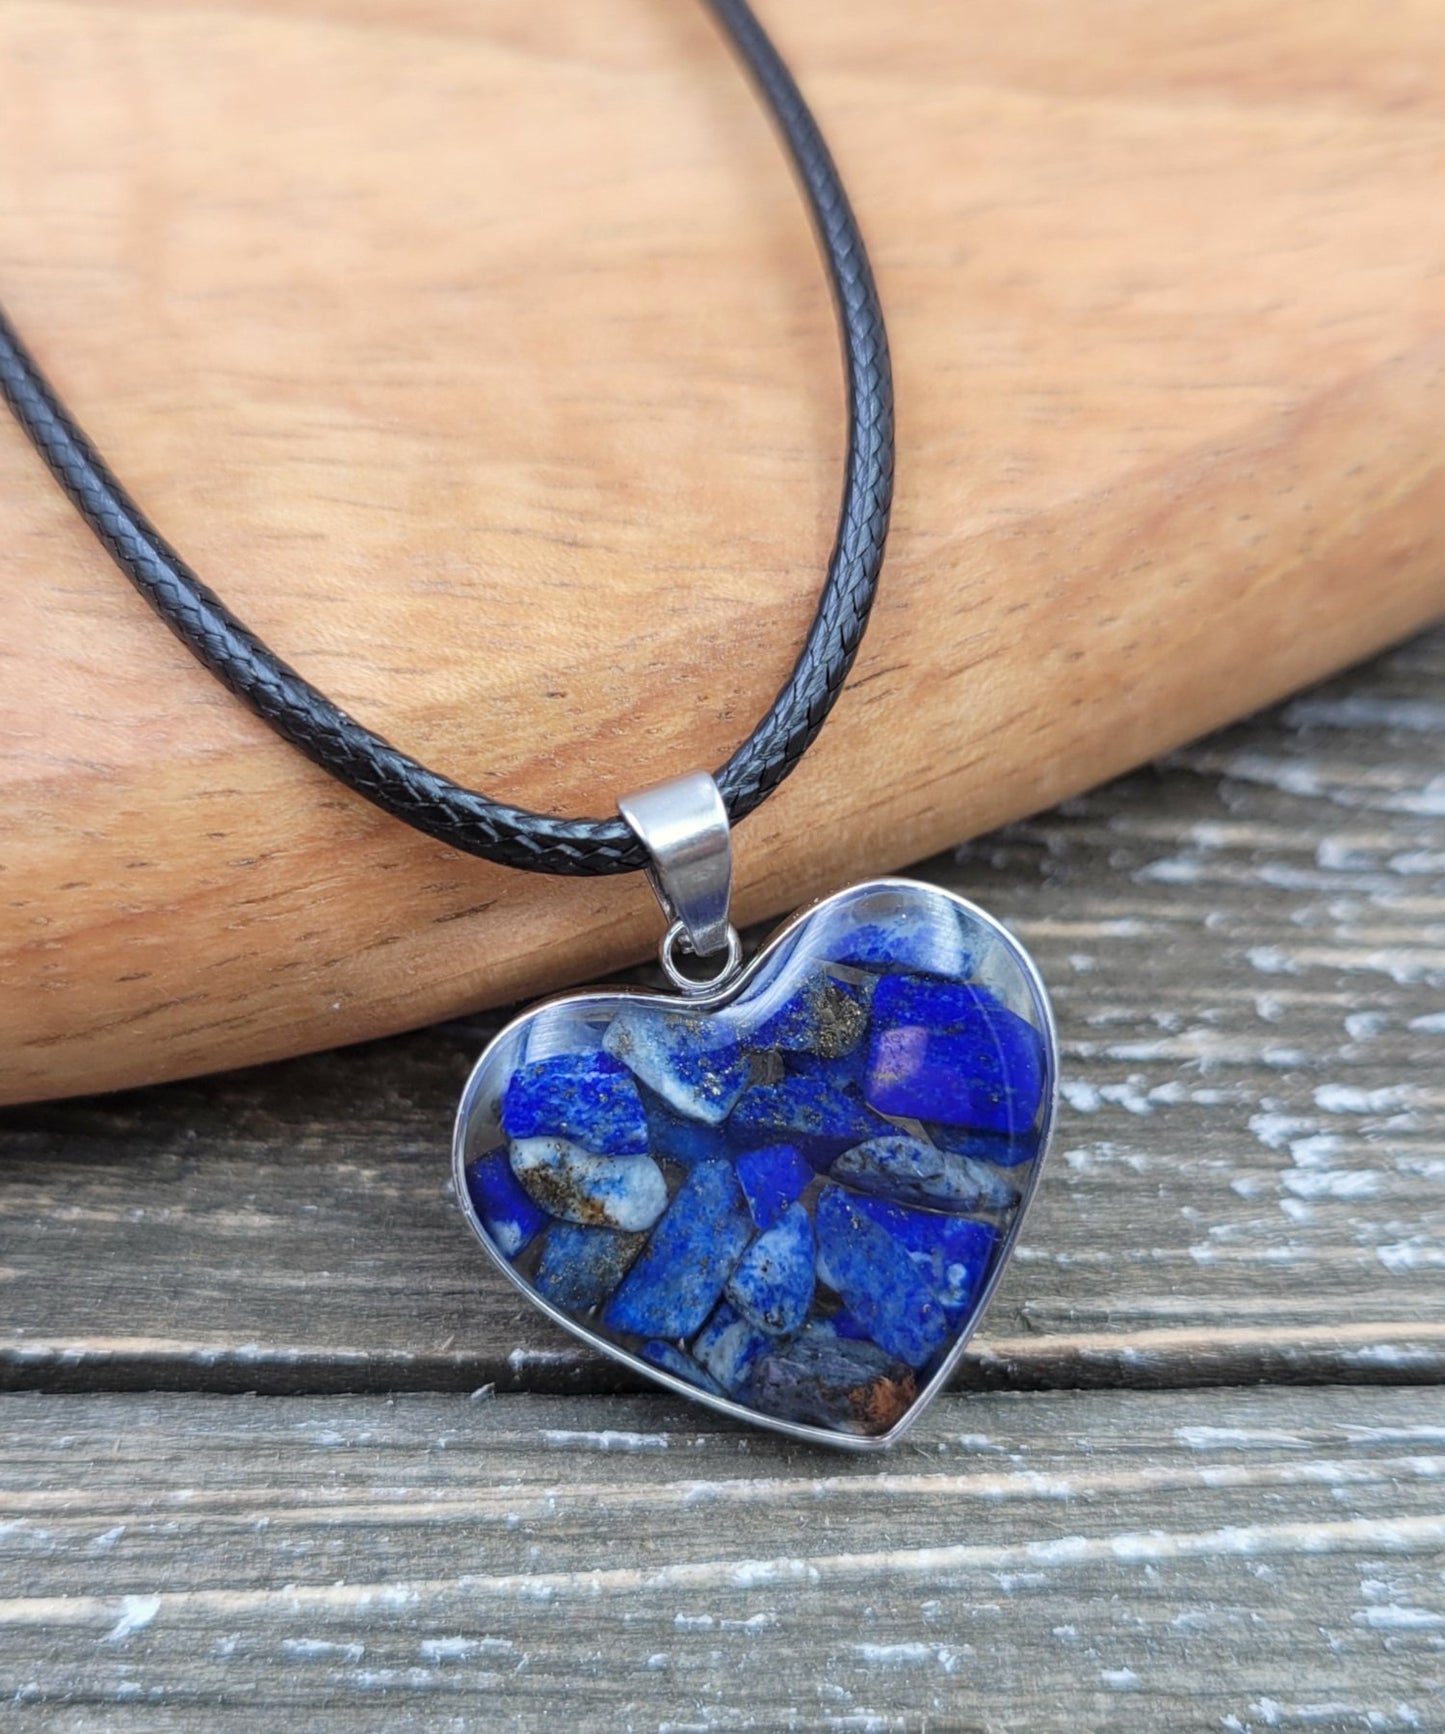 BESHEEK Lapis Lazuli Stone captured in Resin Heart Pendant Necklace? Handmade Hypoallergenic Boho Beach Gala Wedding Style Fashion Jewelry